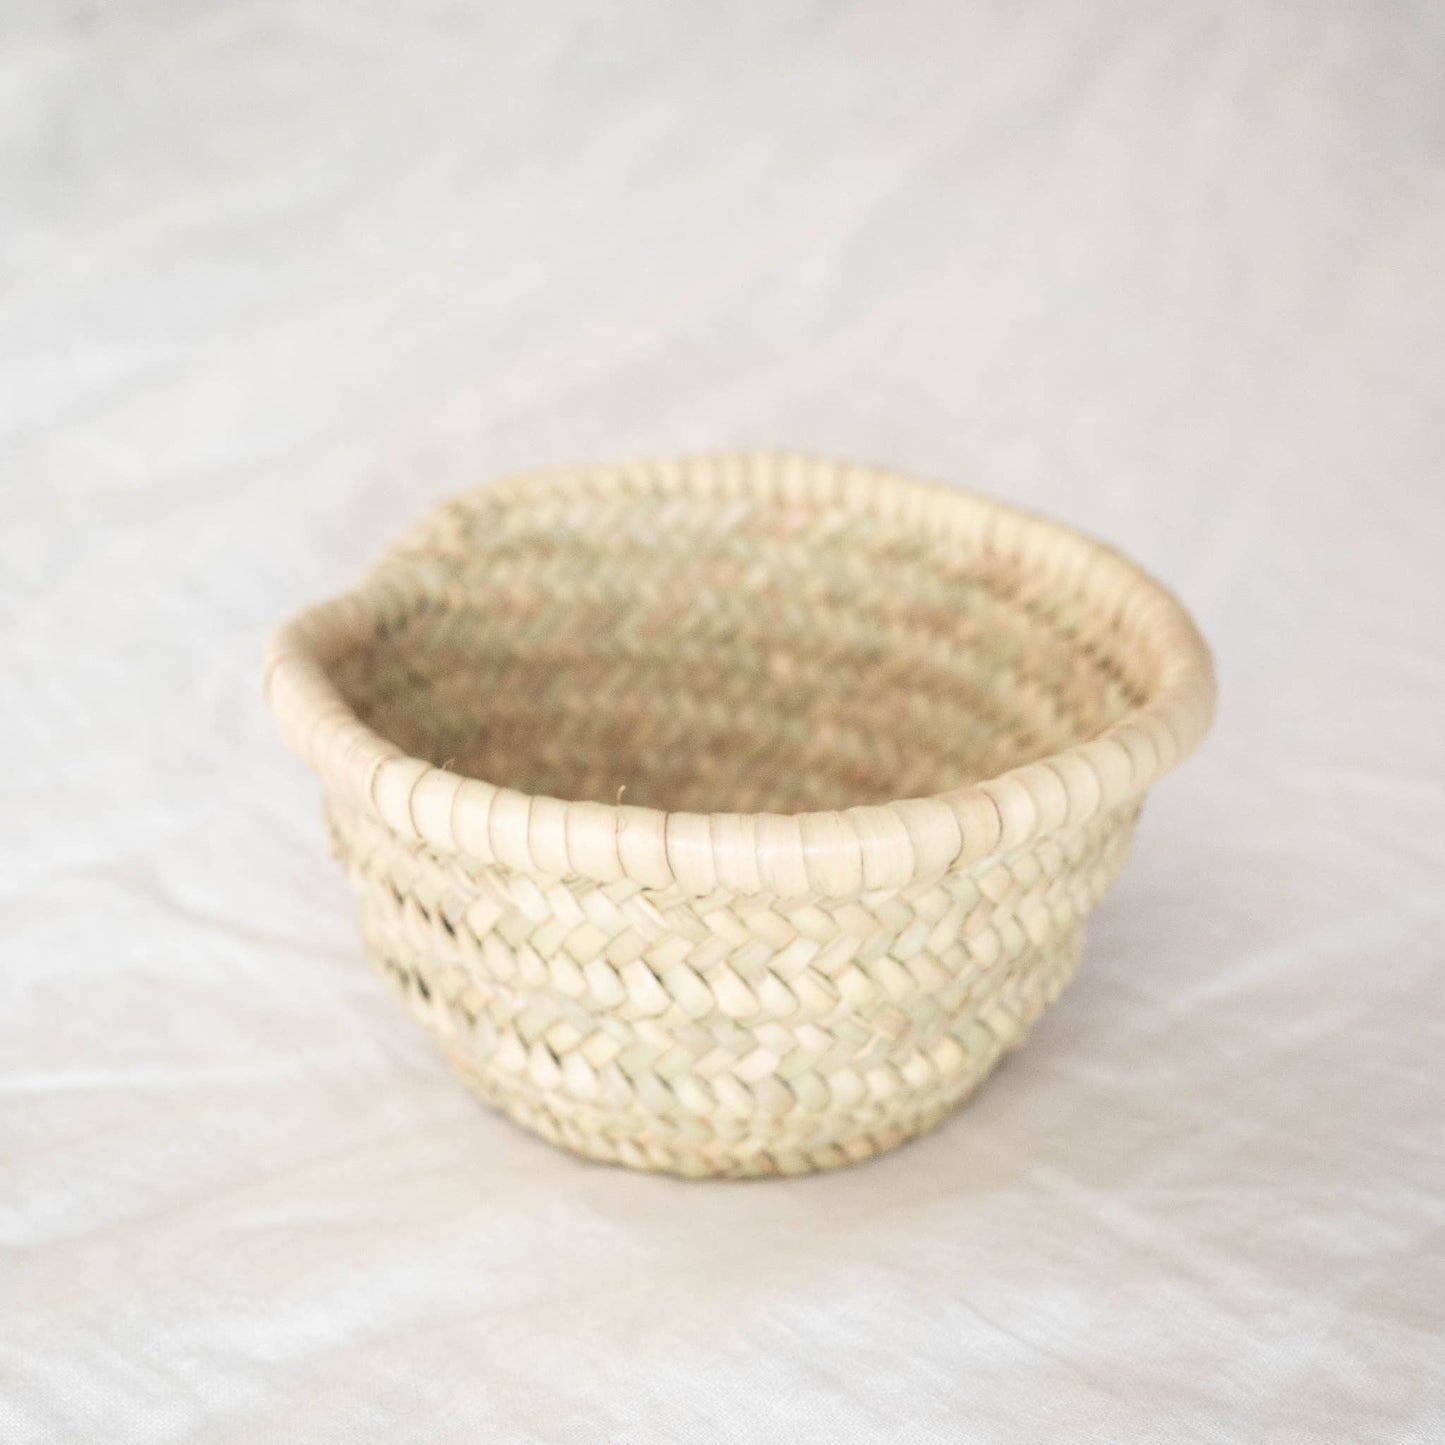 SOCCO Designs - Handwoven Straw Bowl (Small)